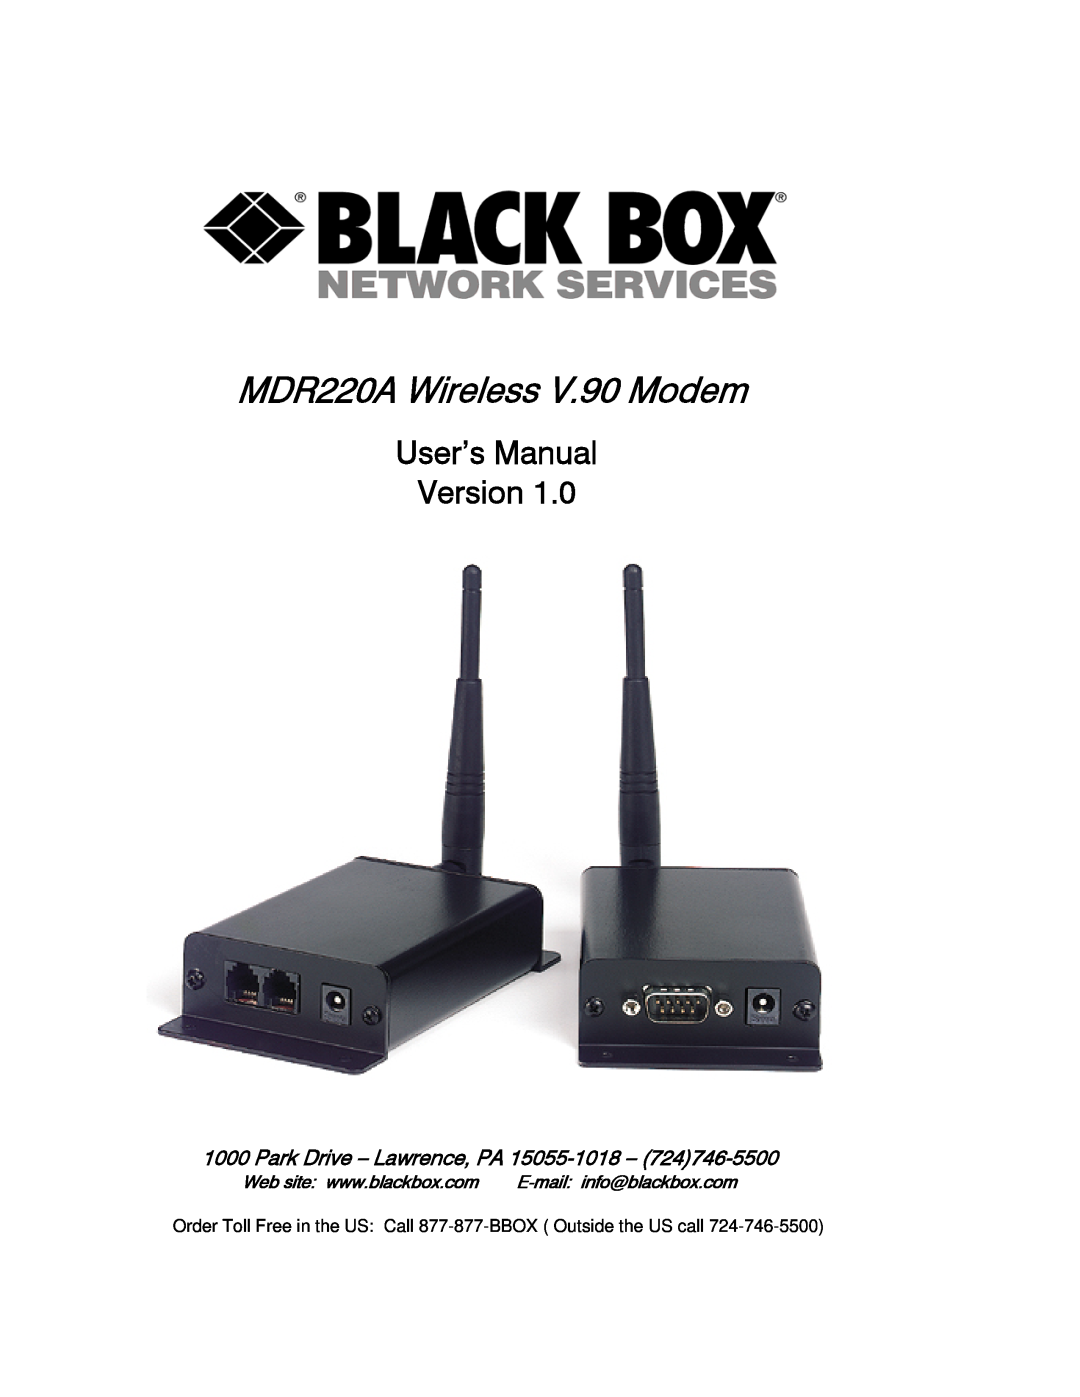 Black Box user manual MDR220A Wireless V.90 Modem, User’s Manual Version, Park Drive - Lawrence, PA 